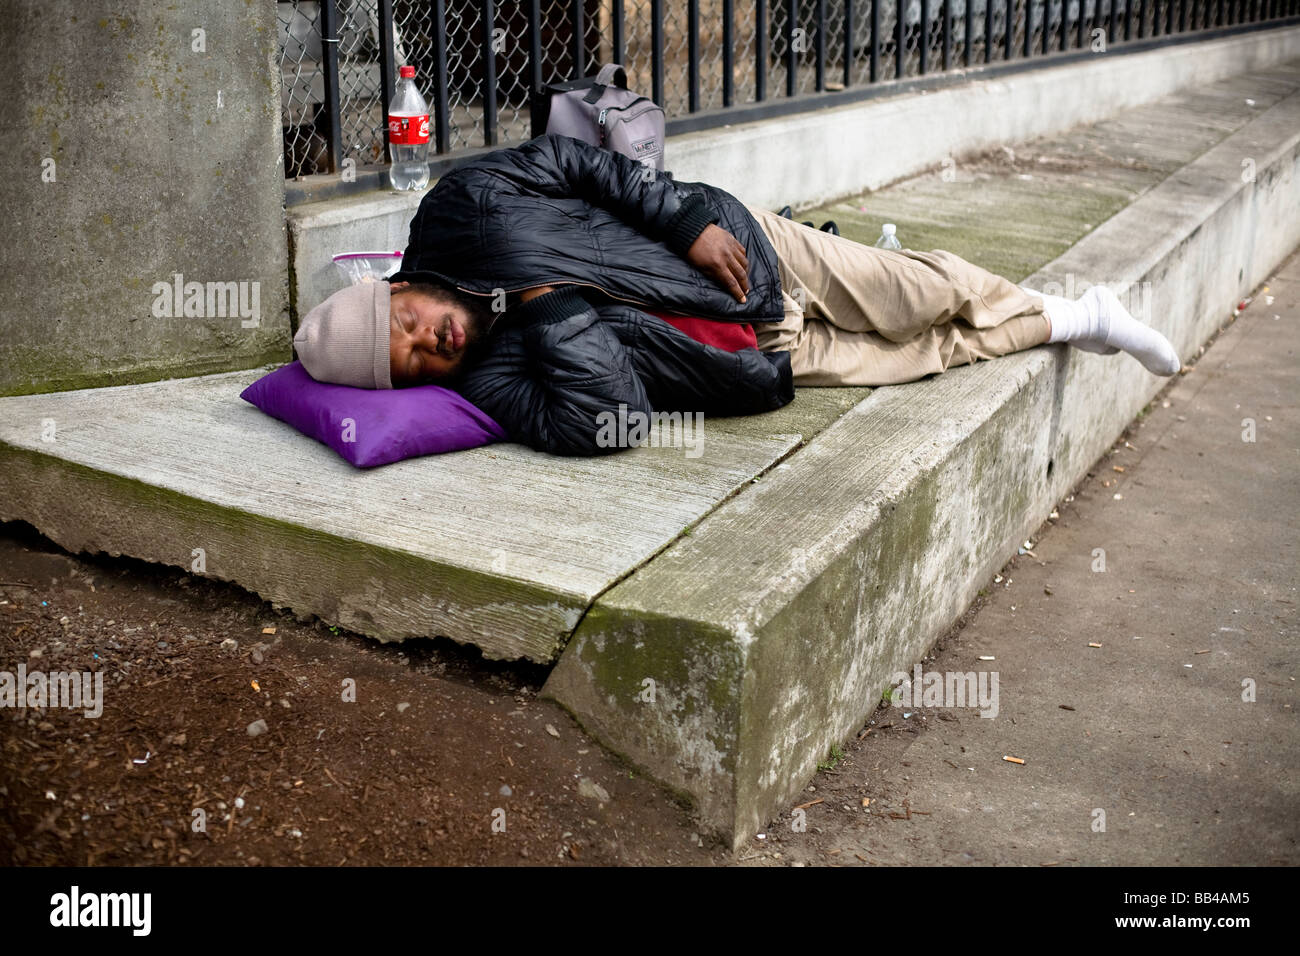 A man sleeps on a concrete sidewalk in Portland, Oregon. Stock Photo